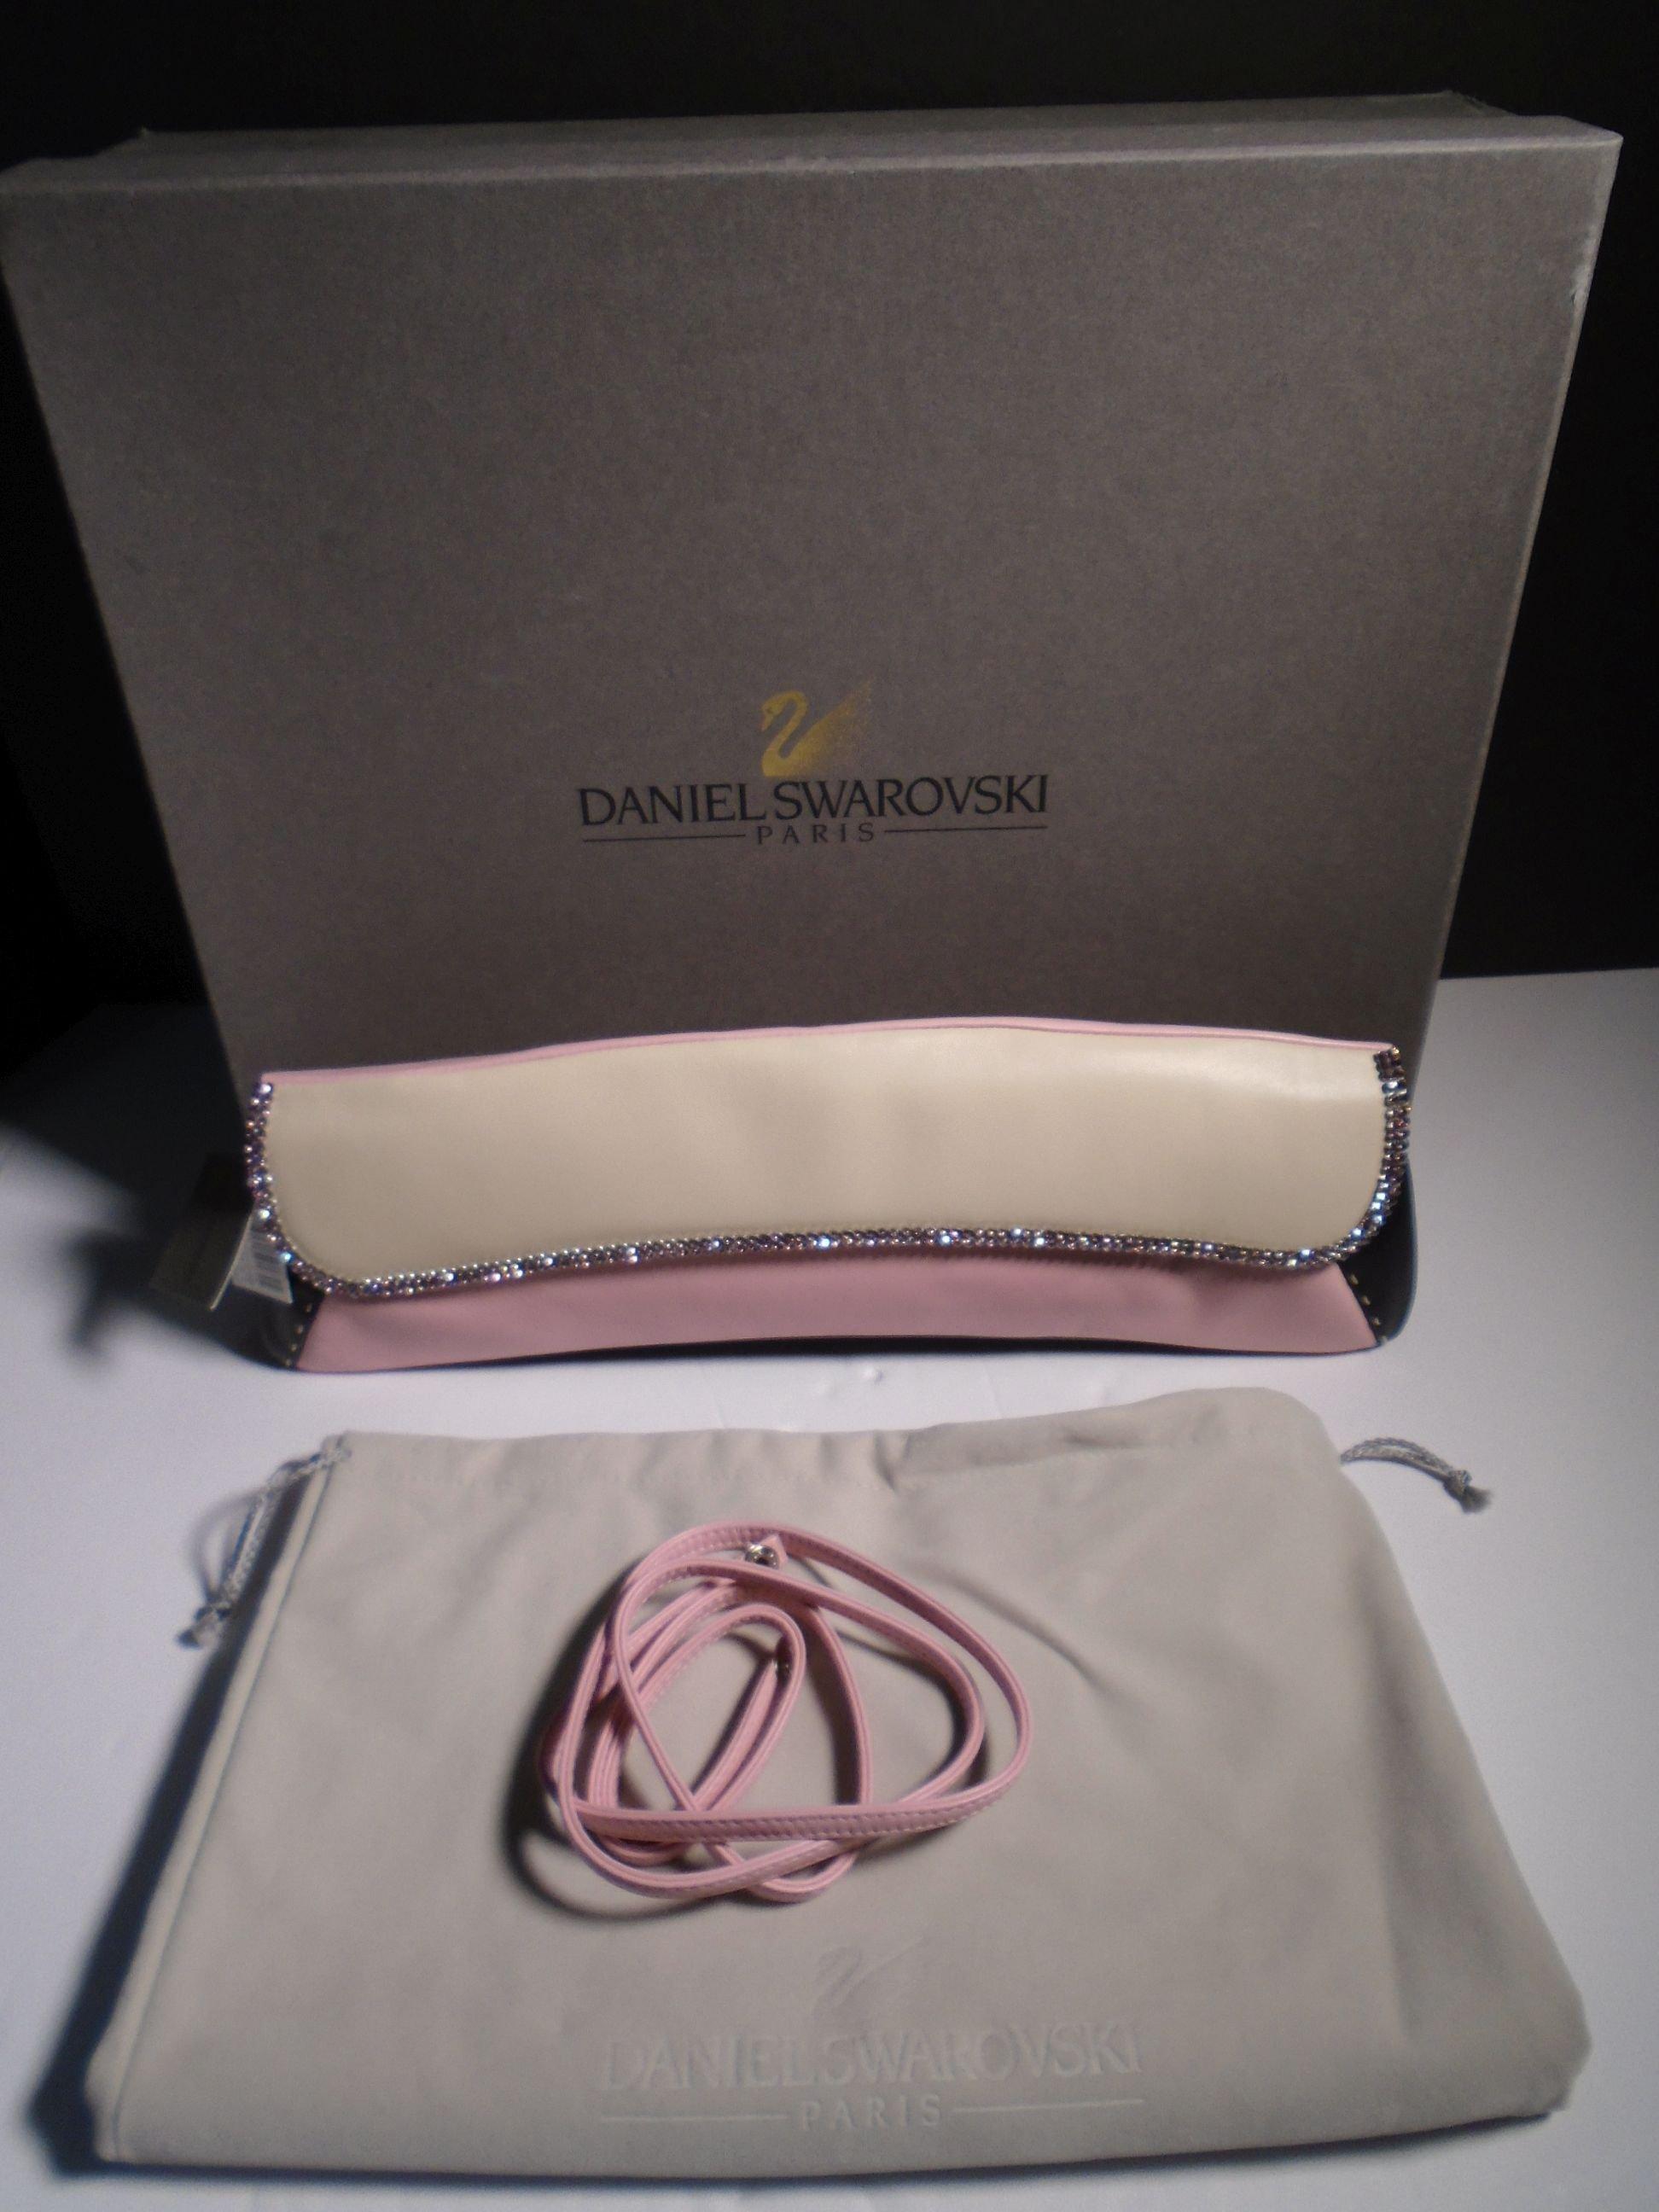 "Jaguar" Daniel Swarovski, champagne, pink & black lambskin clutch with pink strap.